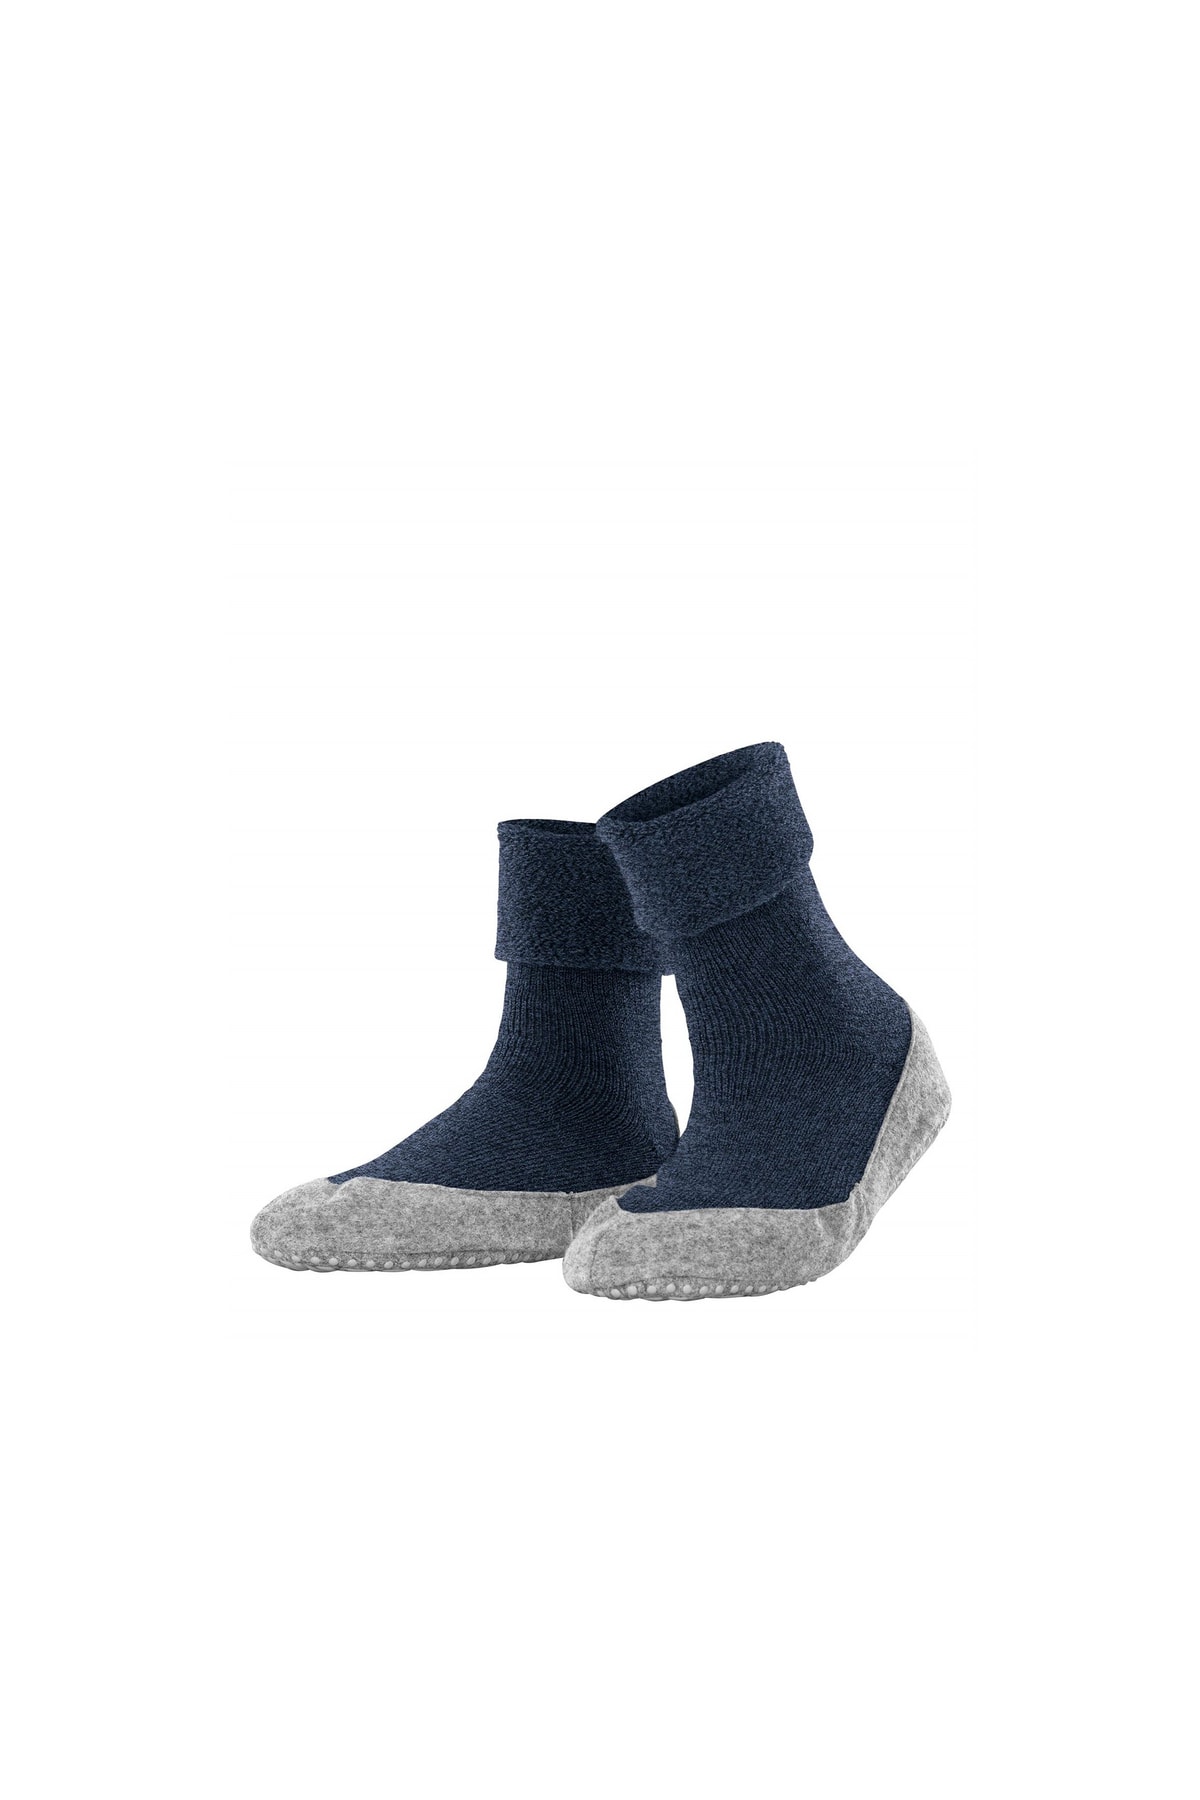 FALKE Socken Blau Casual für Damen – 35-38